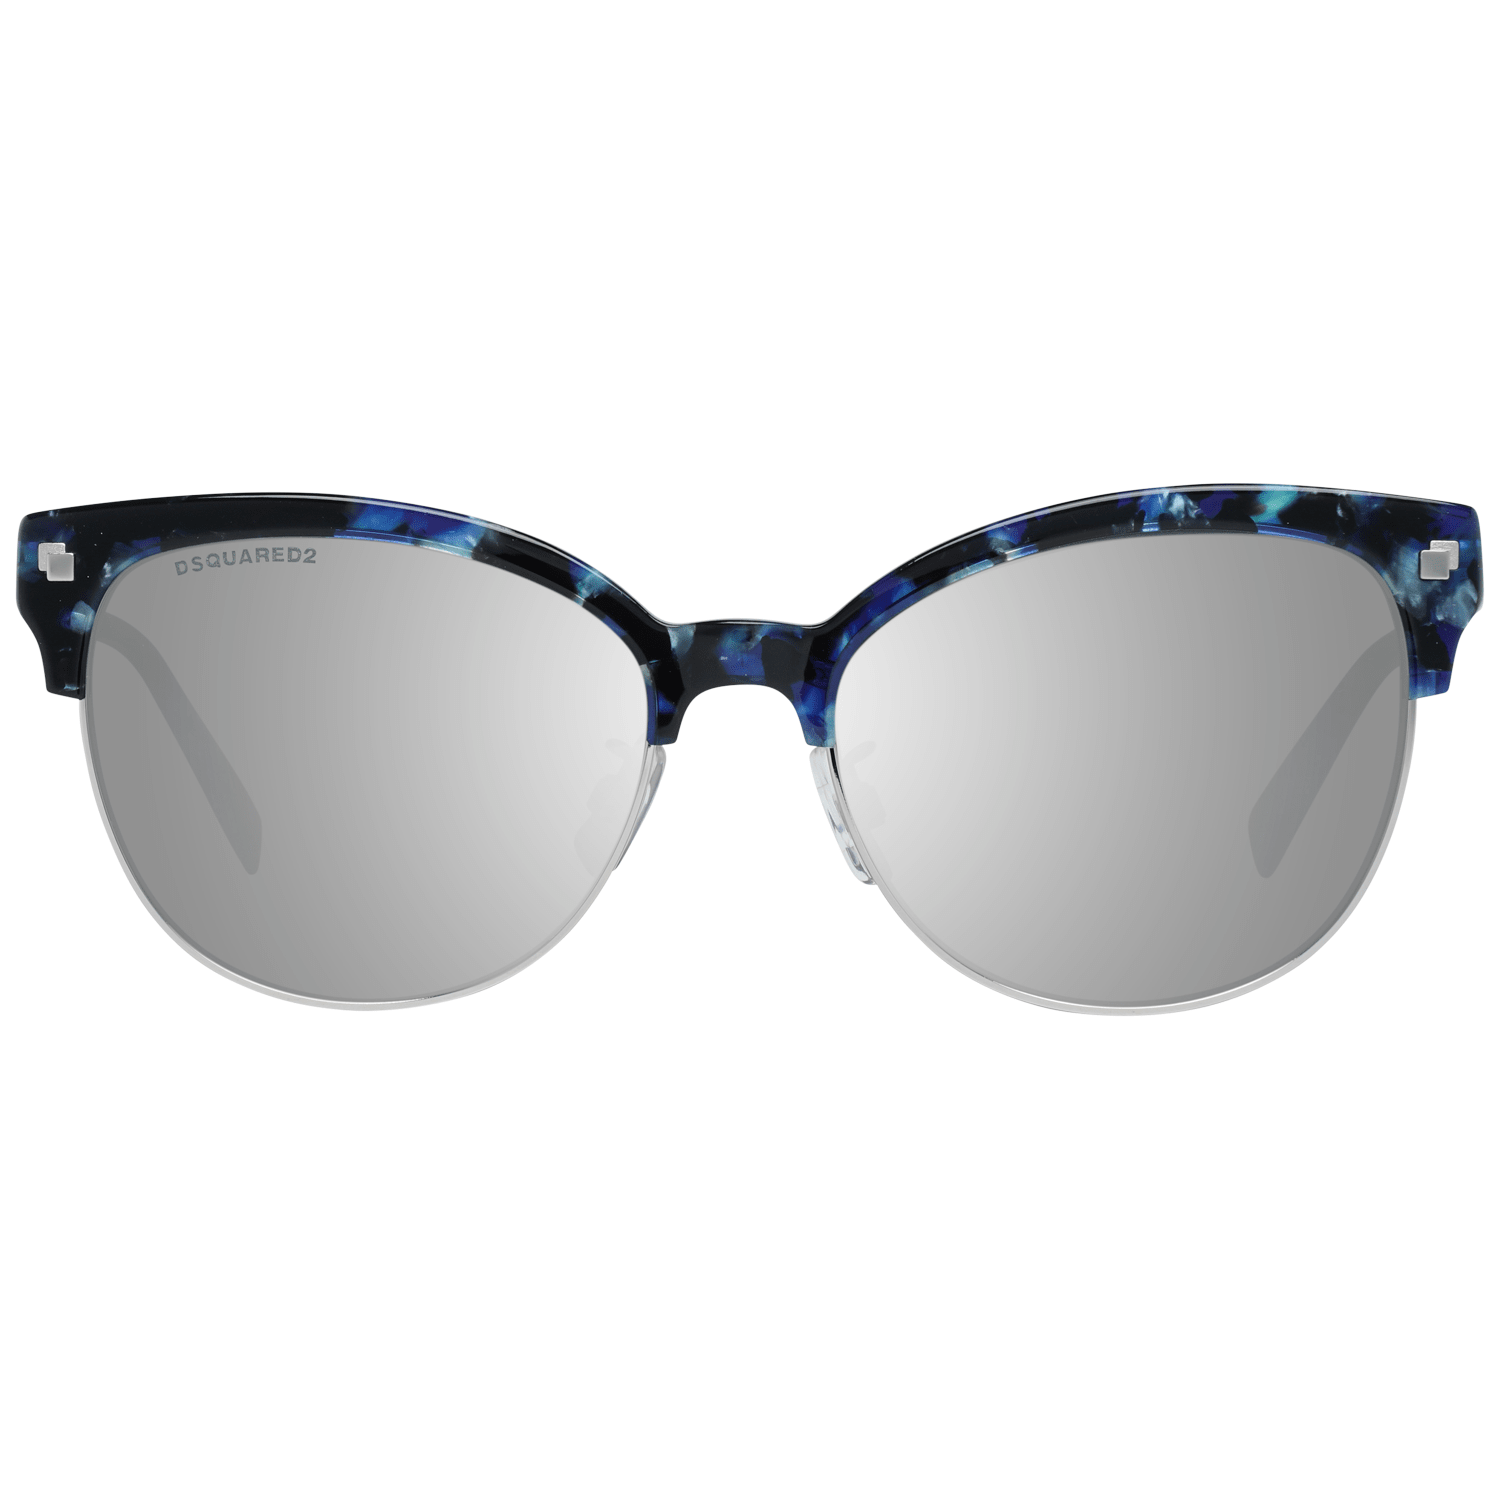 Womens Sunglasses DSquared² Sunglasses DSquared² Blue Sunglasses Save 60% 